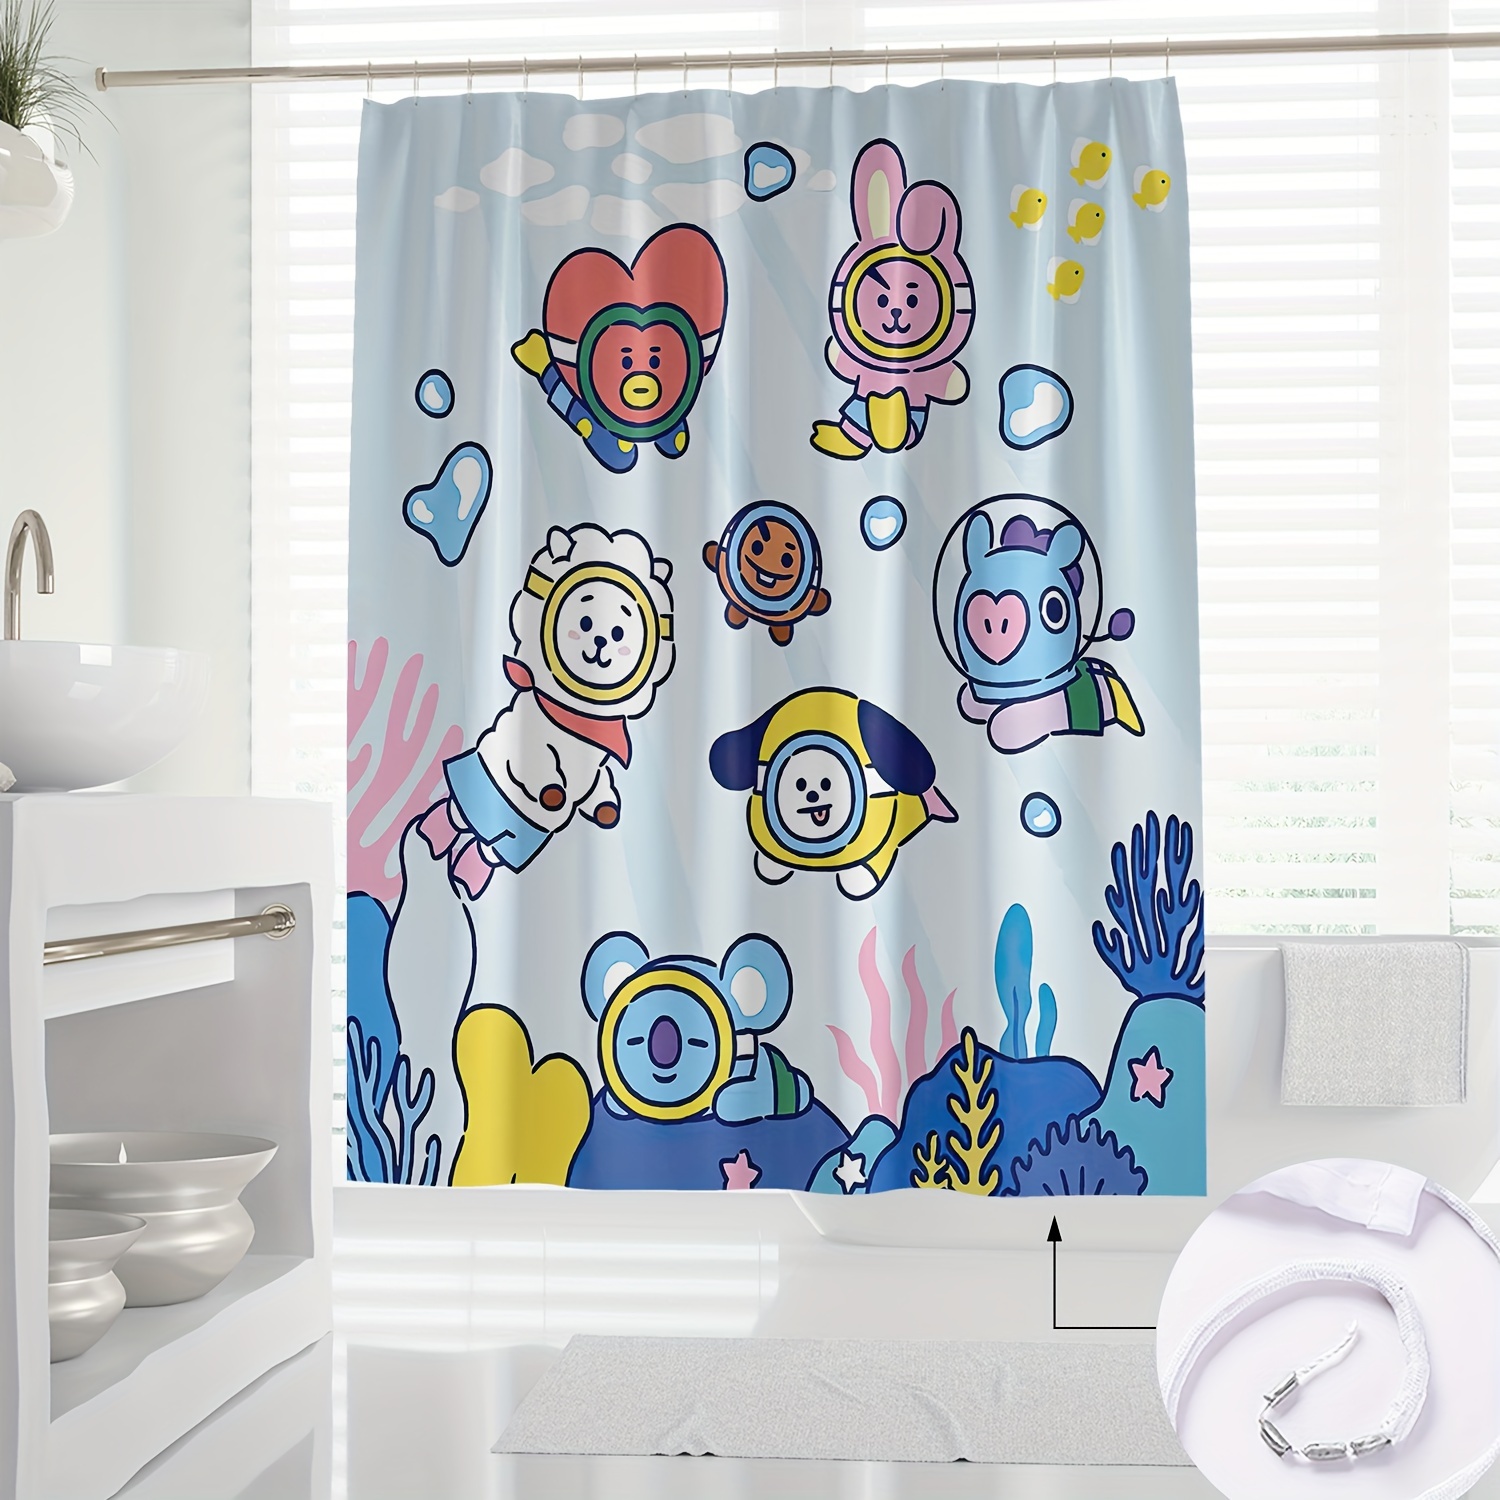 

Bts K-pop Fan Shower Curtain - Waterproof Polyester With Hooks, Cute Cartoon Design For Bathroom Decor, Machine Washable